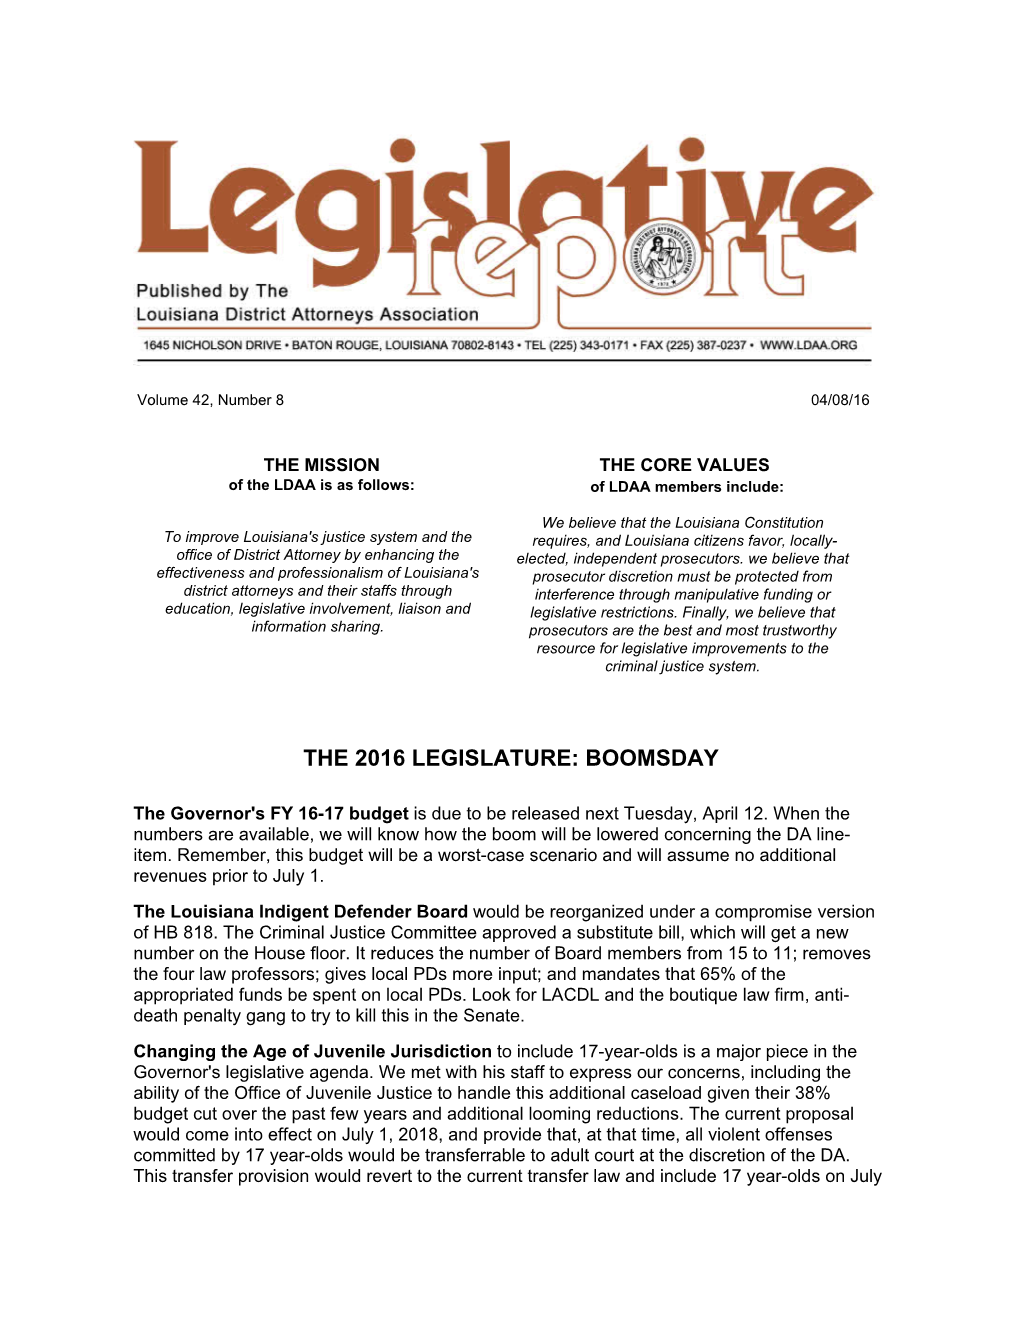 The 2016 Legislature: Boomsday